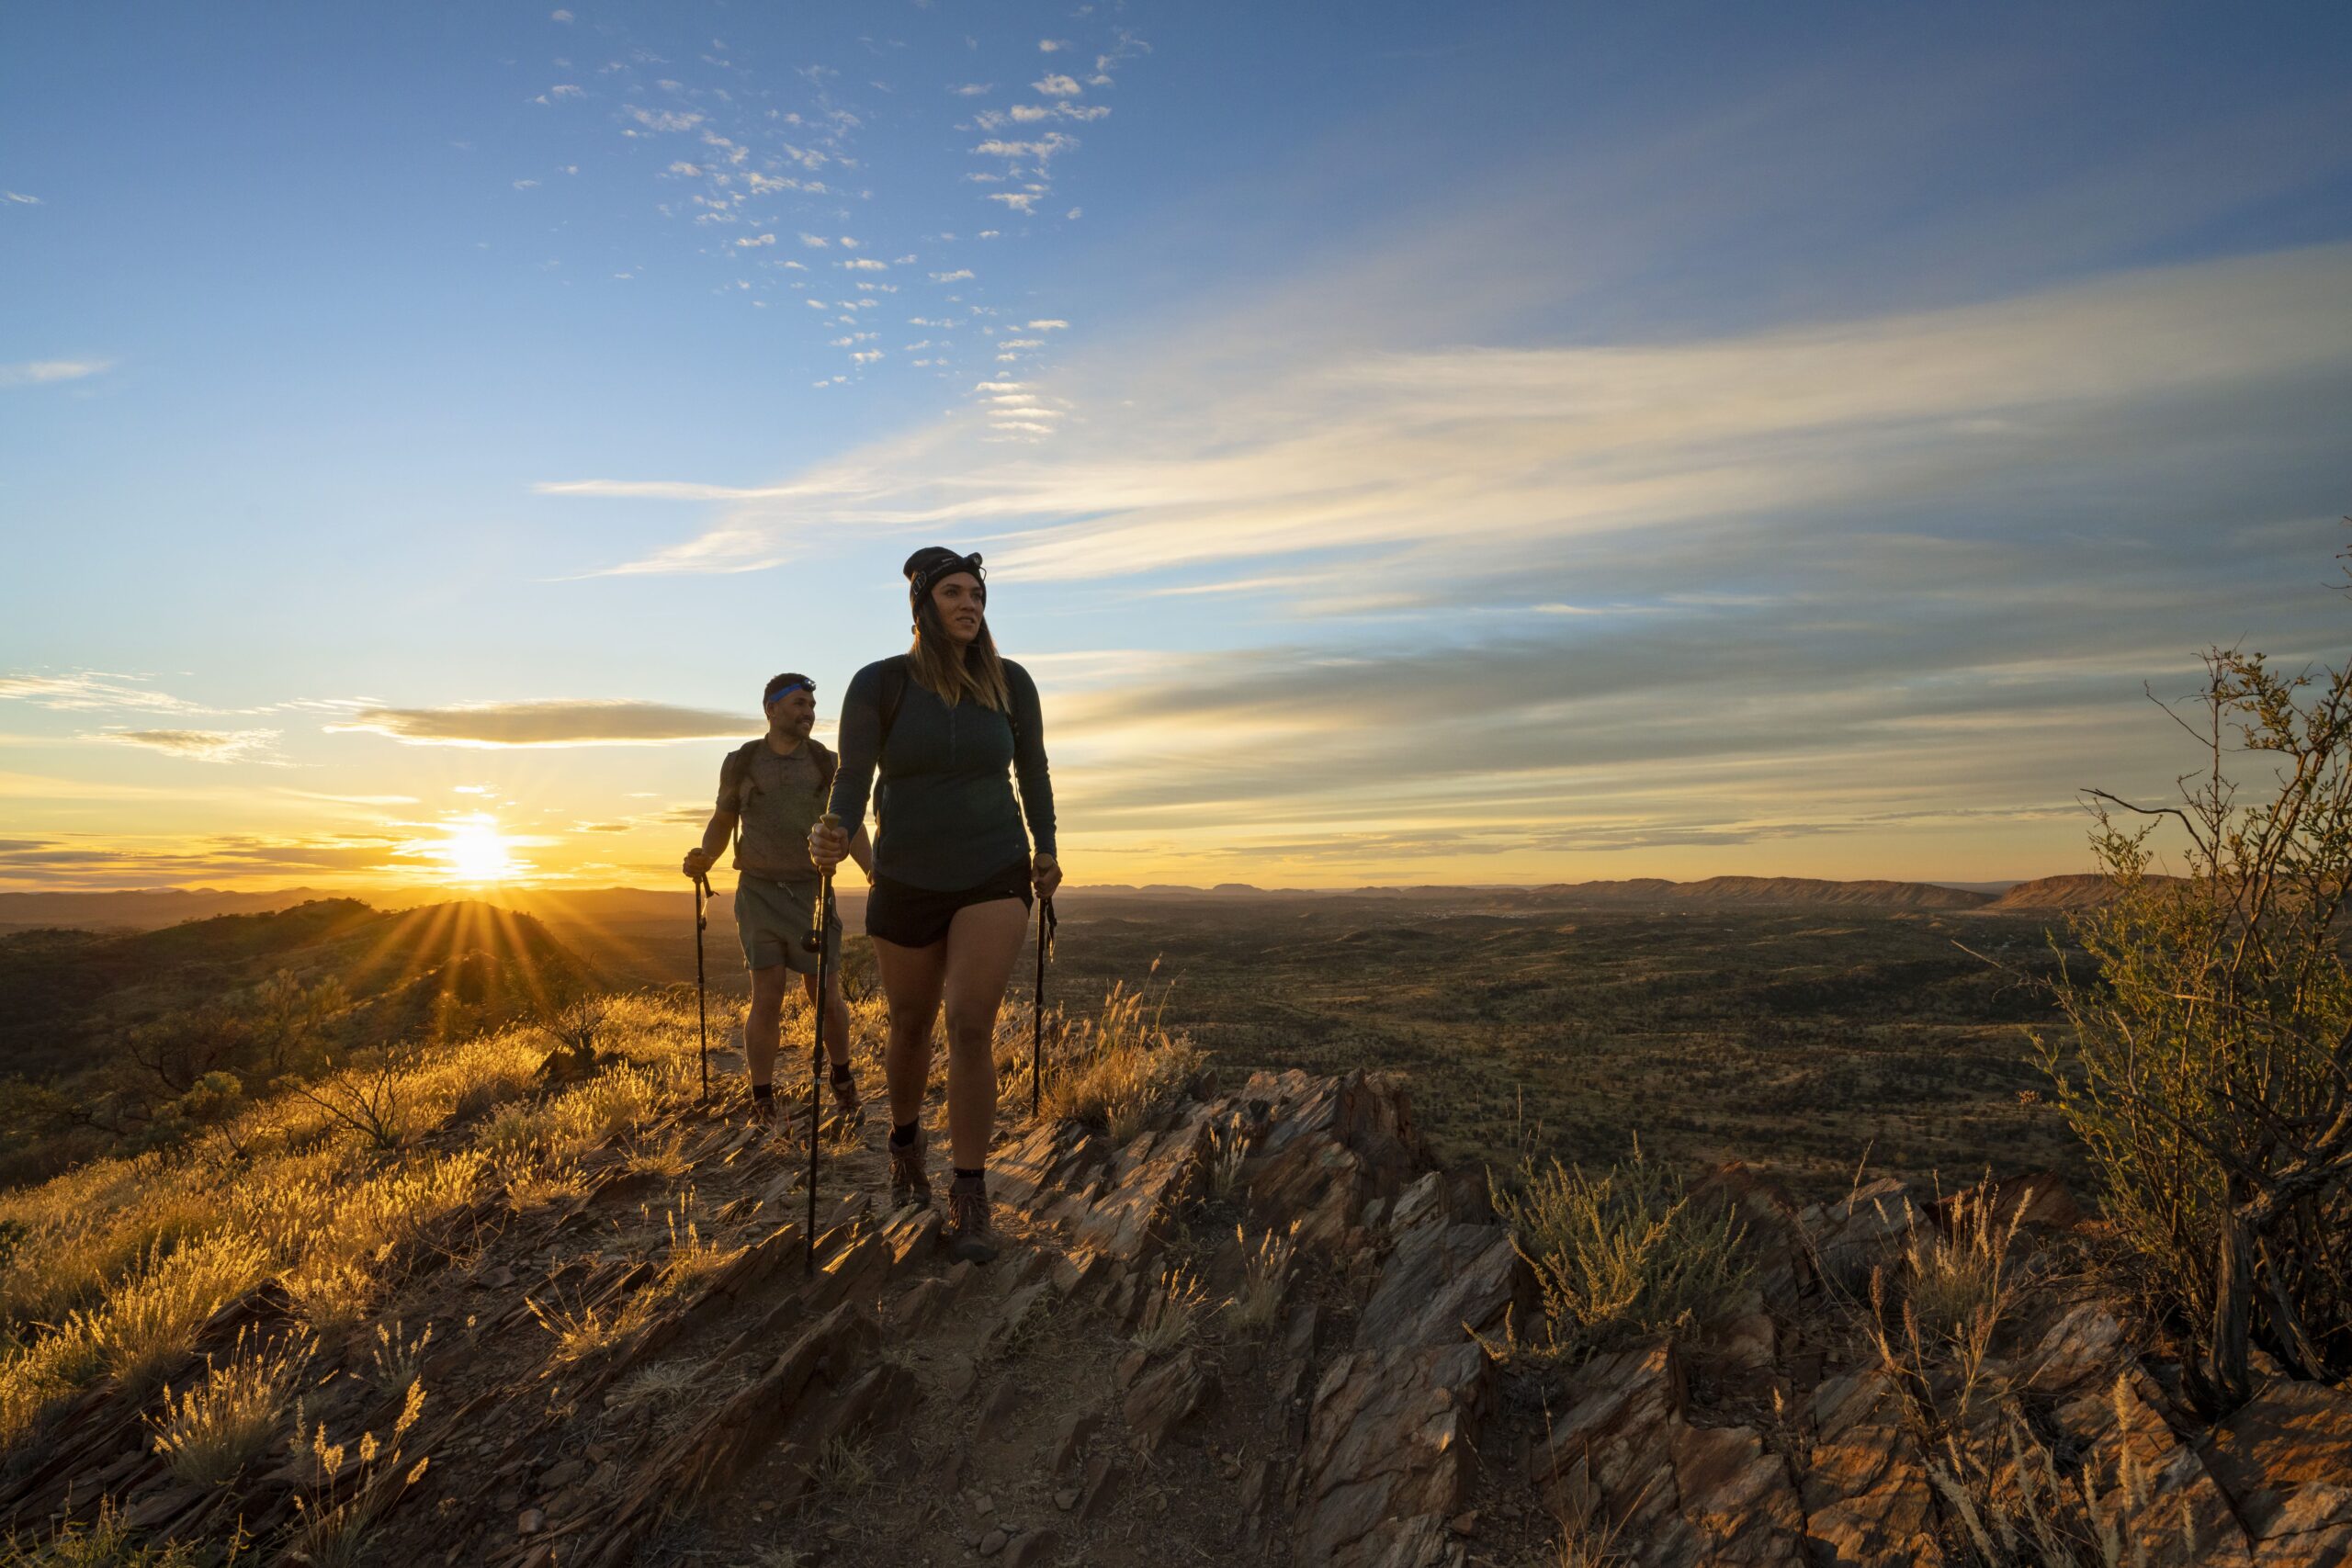 Walking Country: Larapinta Trail 5 Day Trek - Private Single Safari Tent from Alice Springs